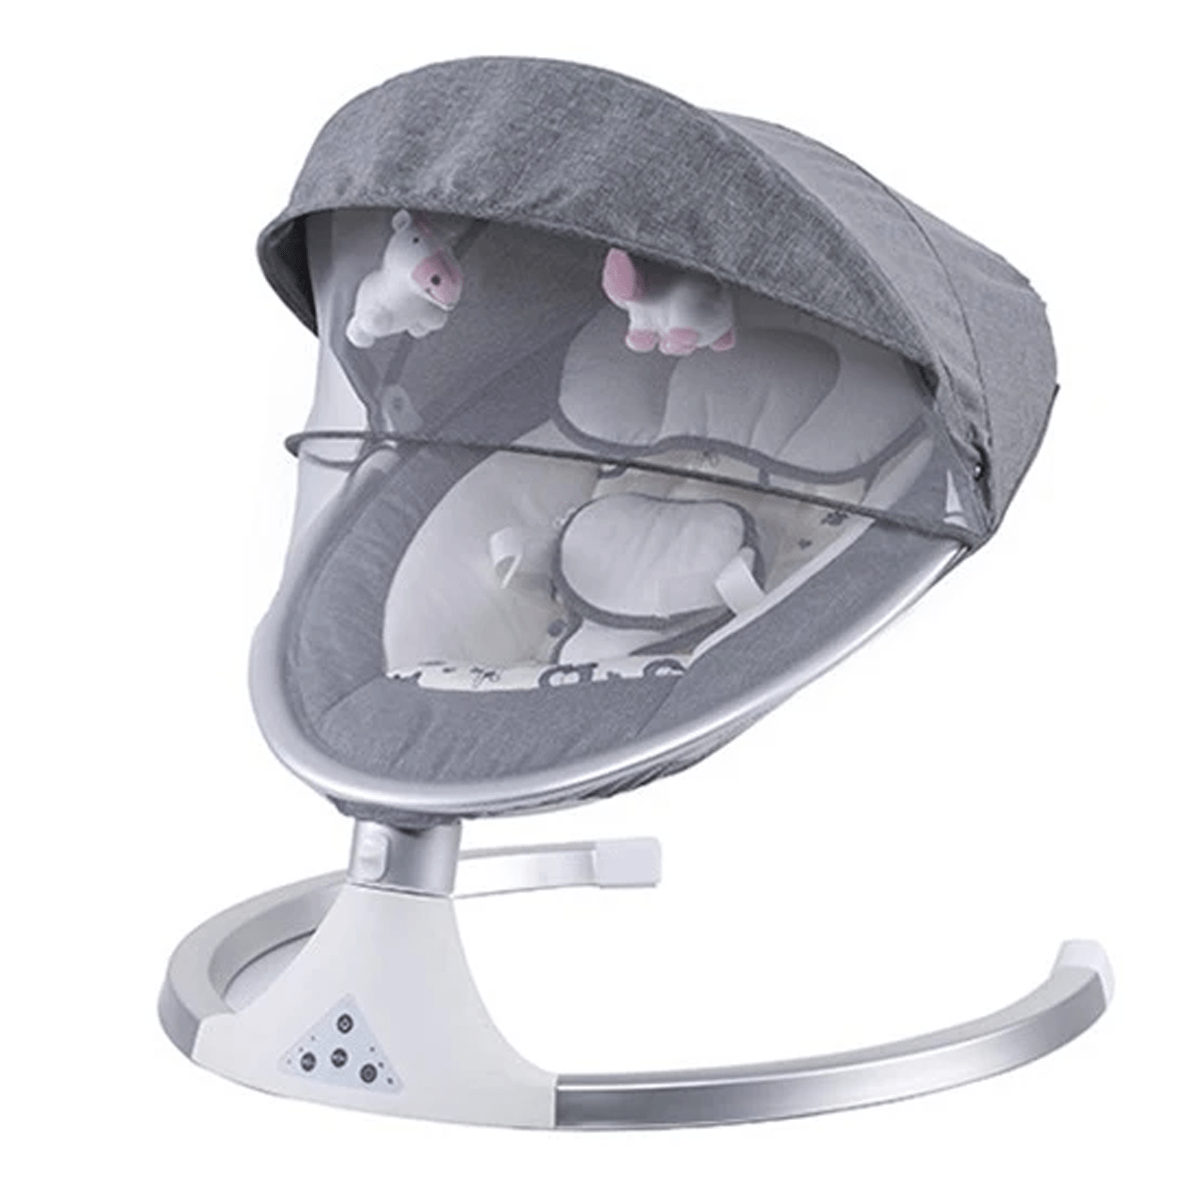 Little Angel - Baby Swing Chair Grey